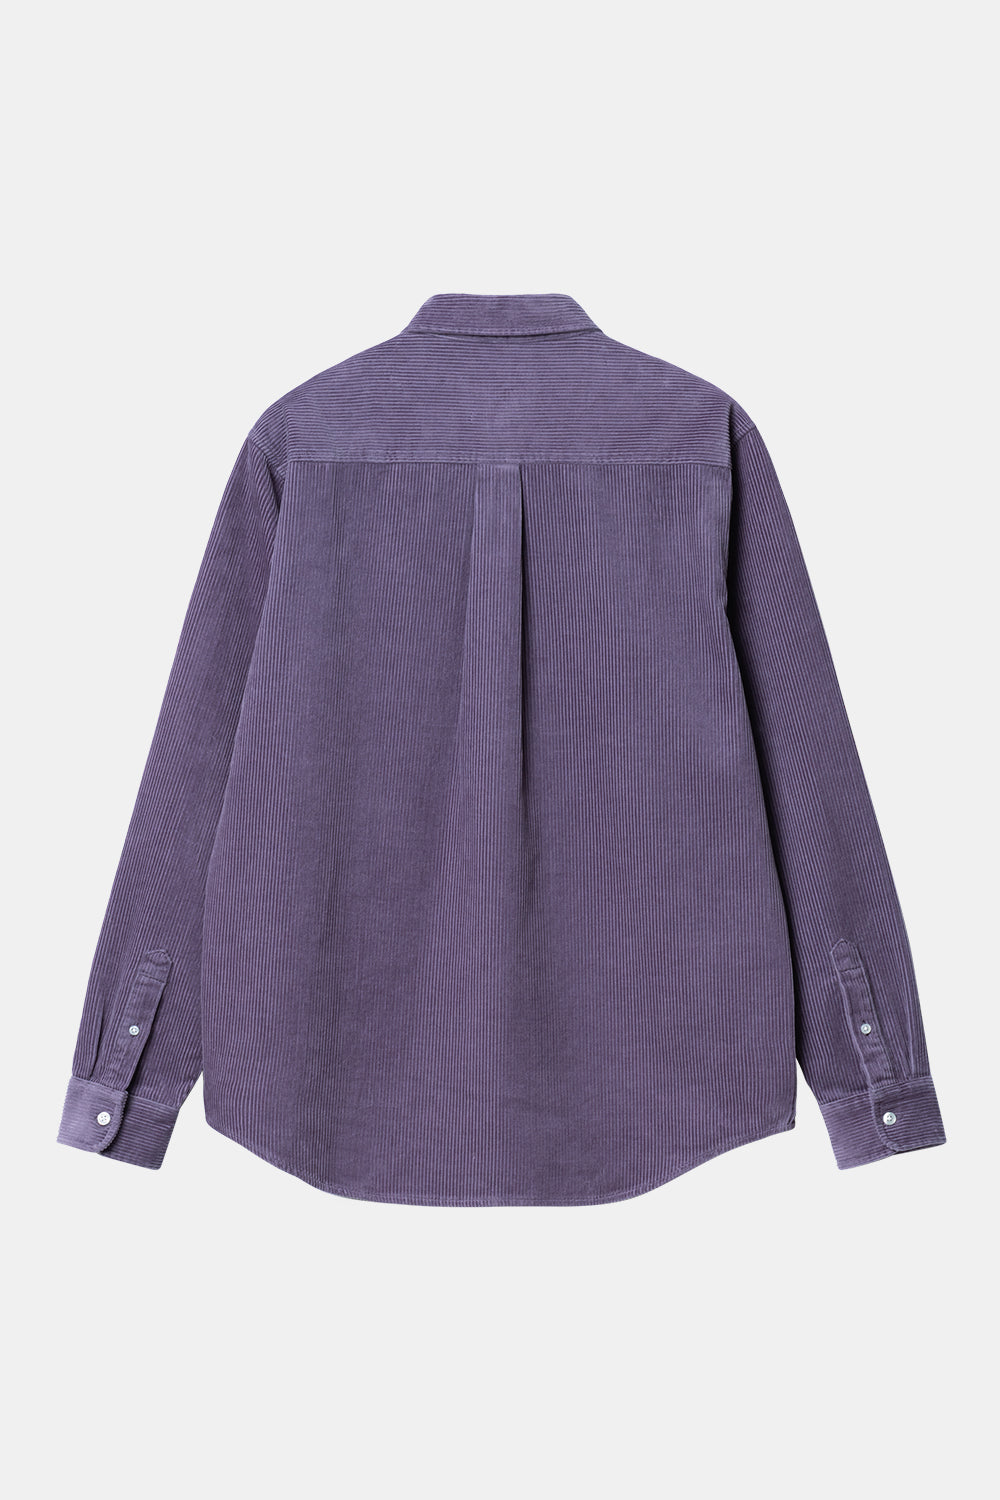 Carhartt WIP Madison Cord Long Sleeve Shirt (Glassy Purple/Black)